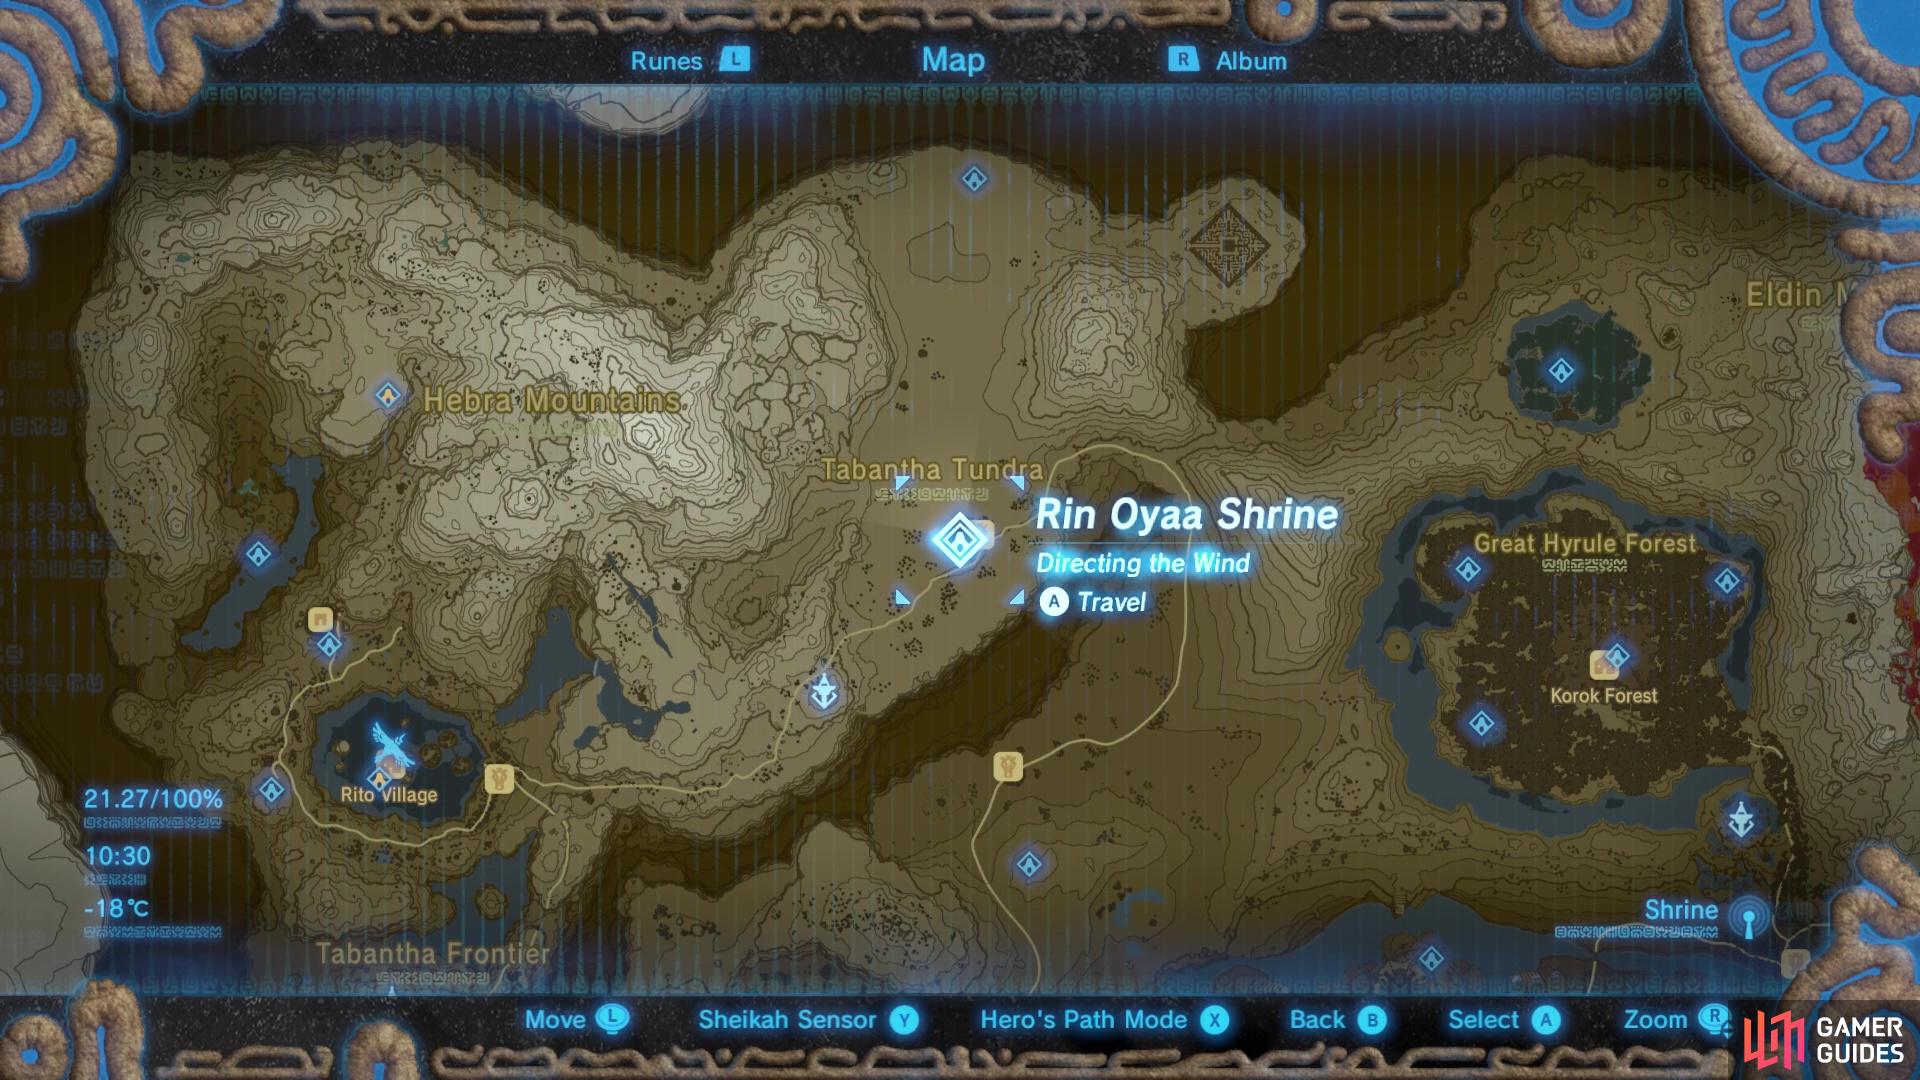 Rin Oyaa Shrine is found near Snowfield Stable